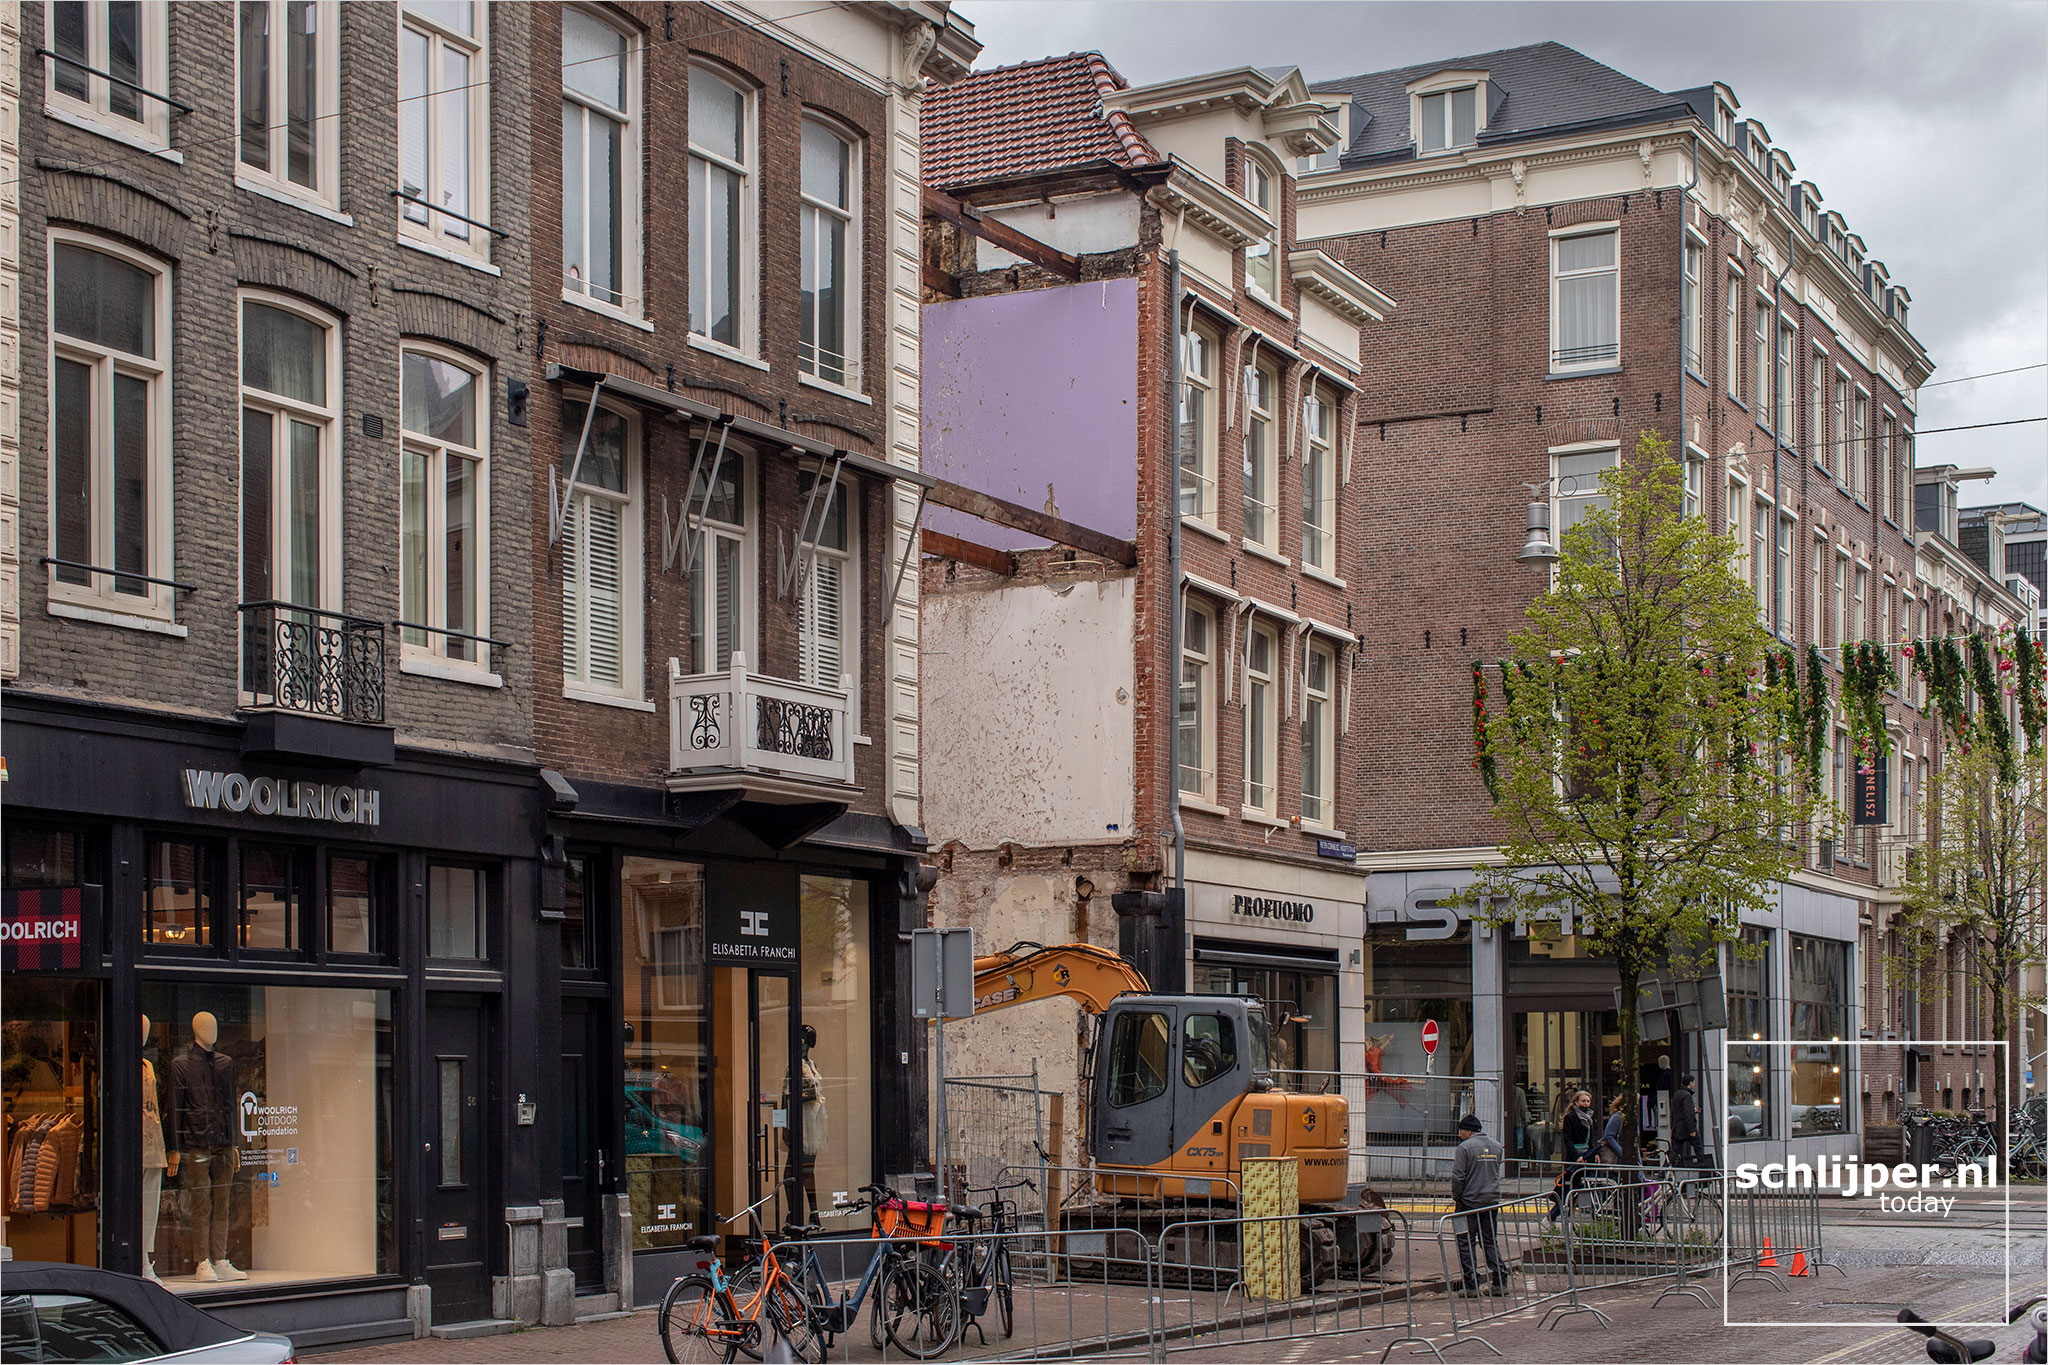 The Netherlands, Amsterdam, 4 mei 2021